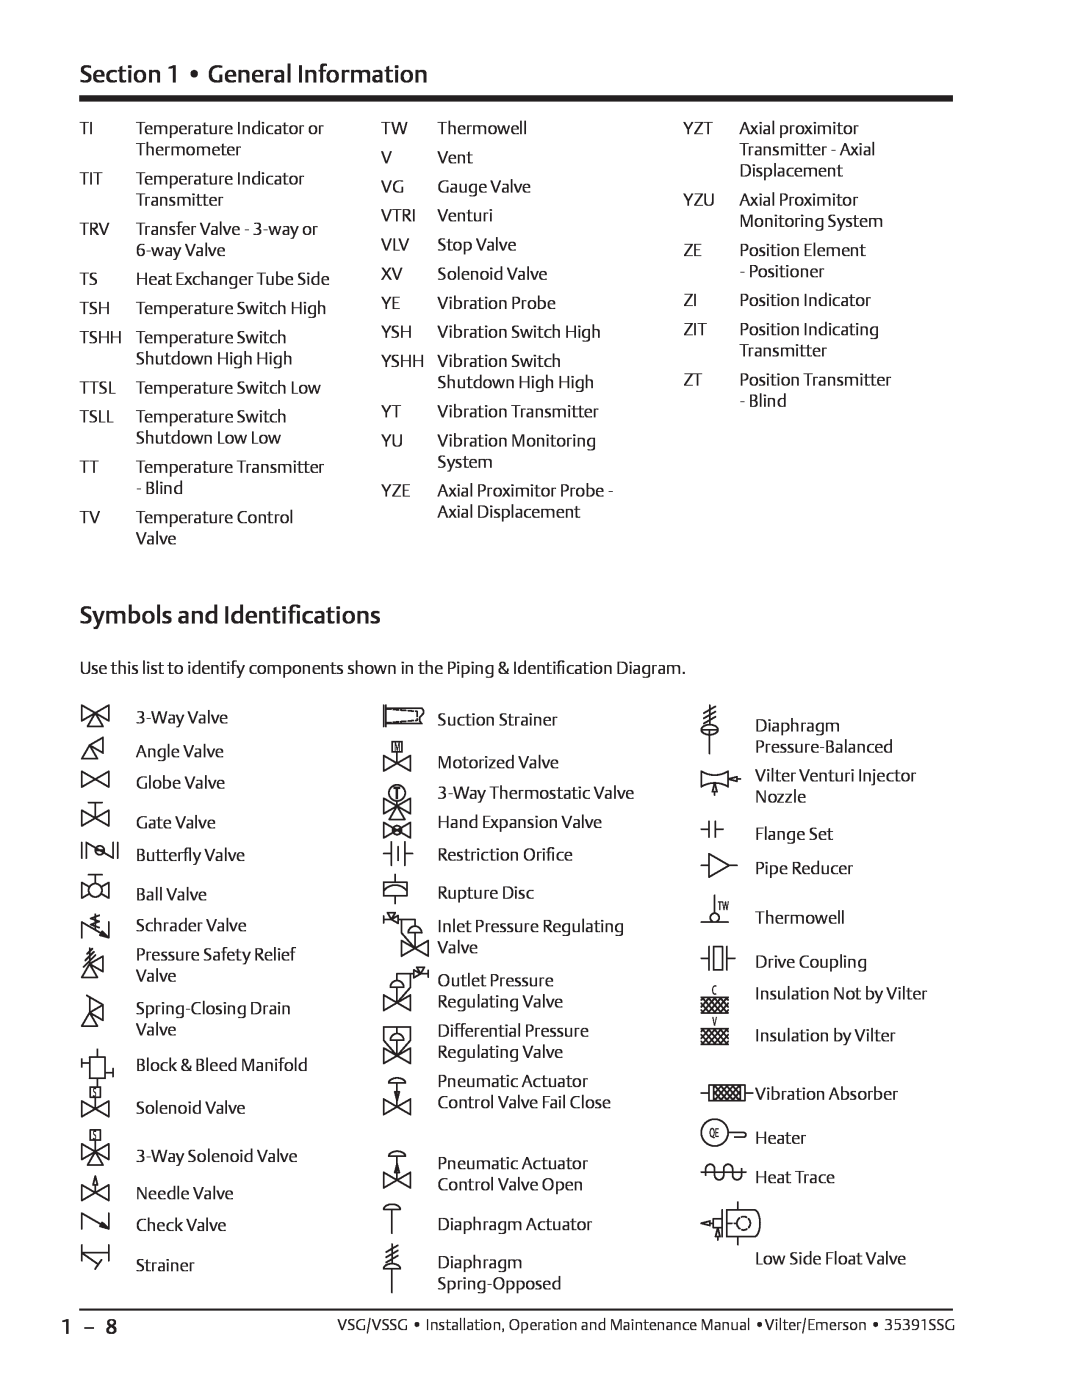 Emerson VSSG, VSG manual Symbols and Identiﬁcations, General Information, Position Transmitter, Way Thermostatic Valve 